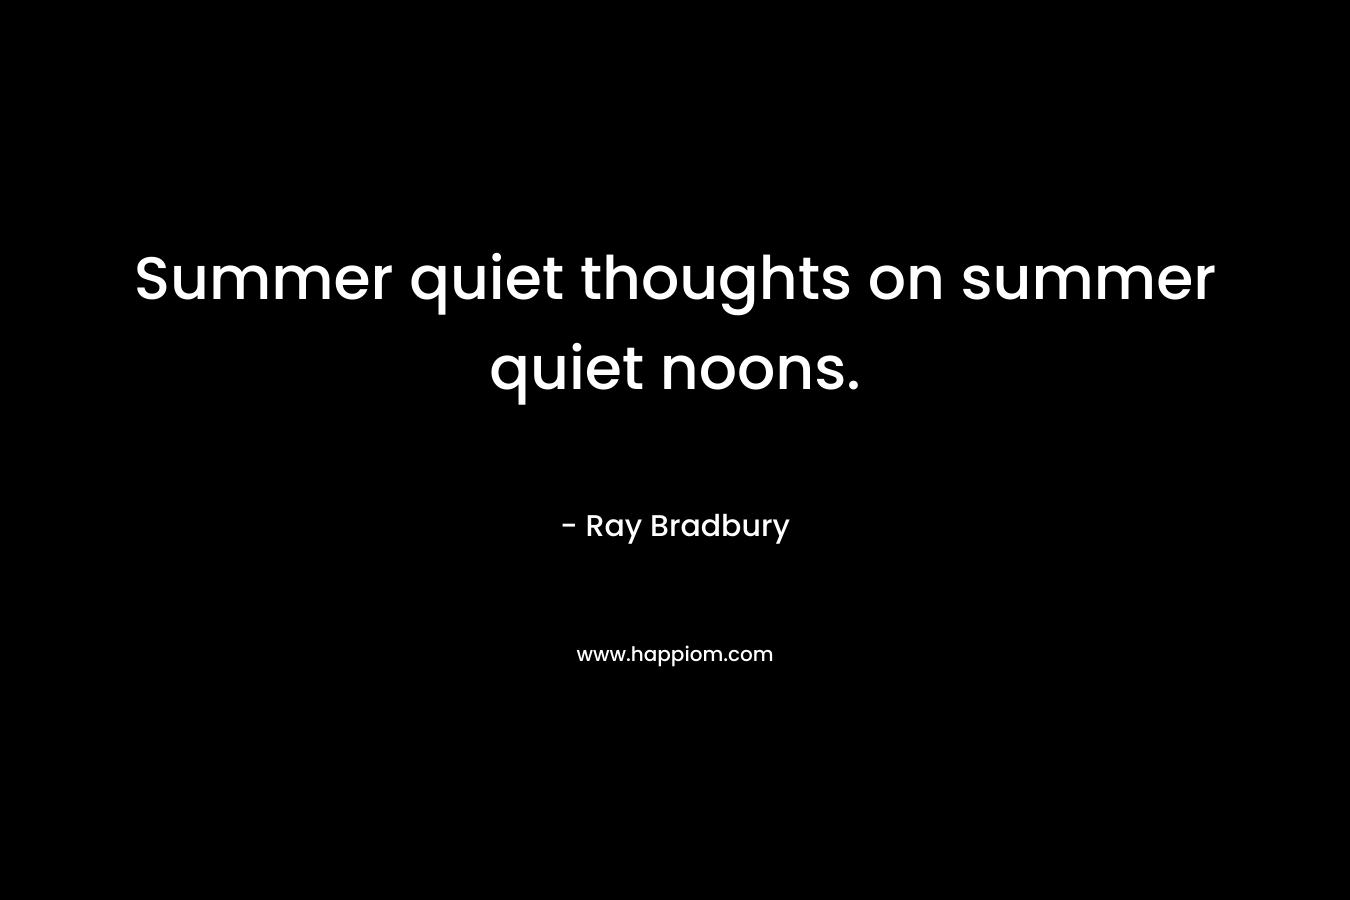 Summer quiet thoughts on summer quiet noons.